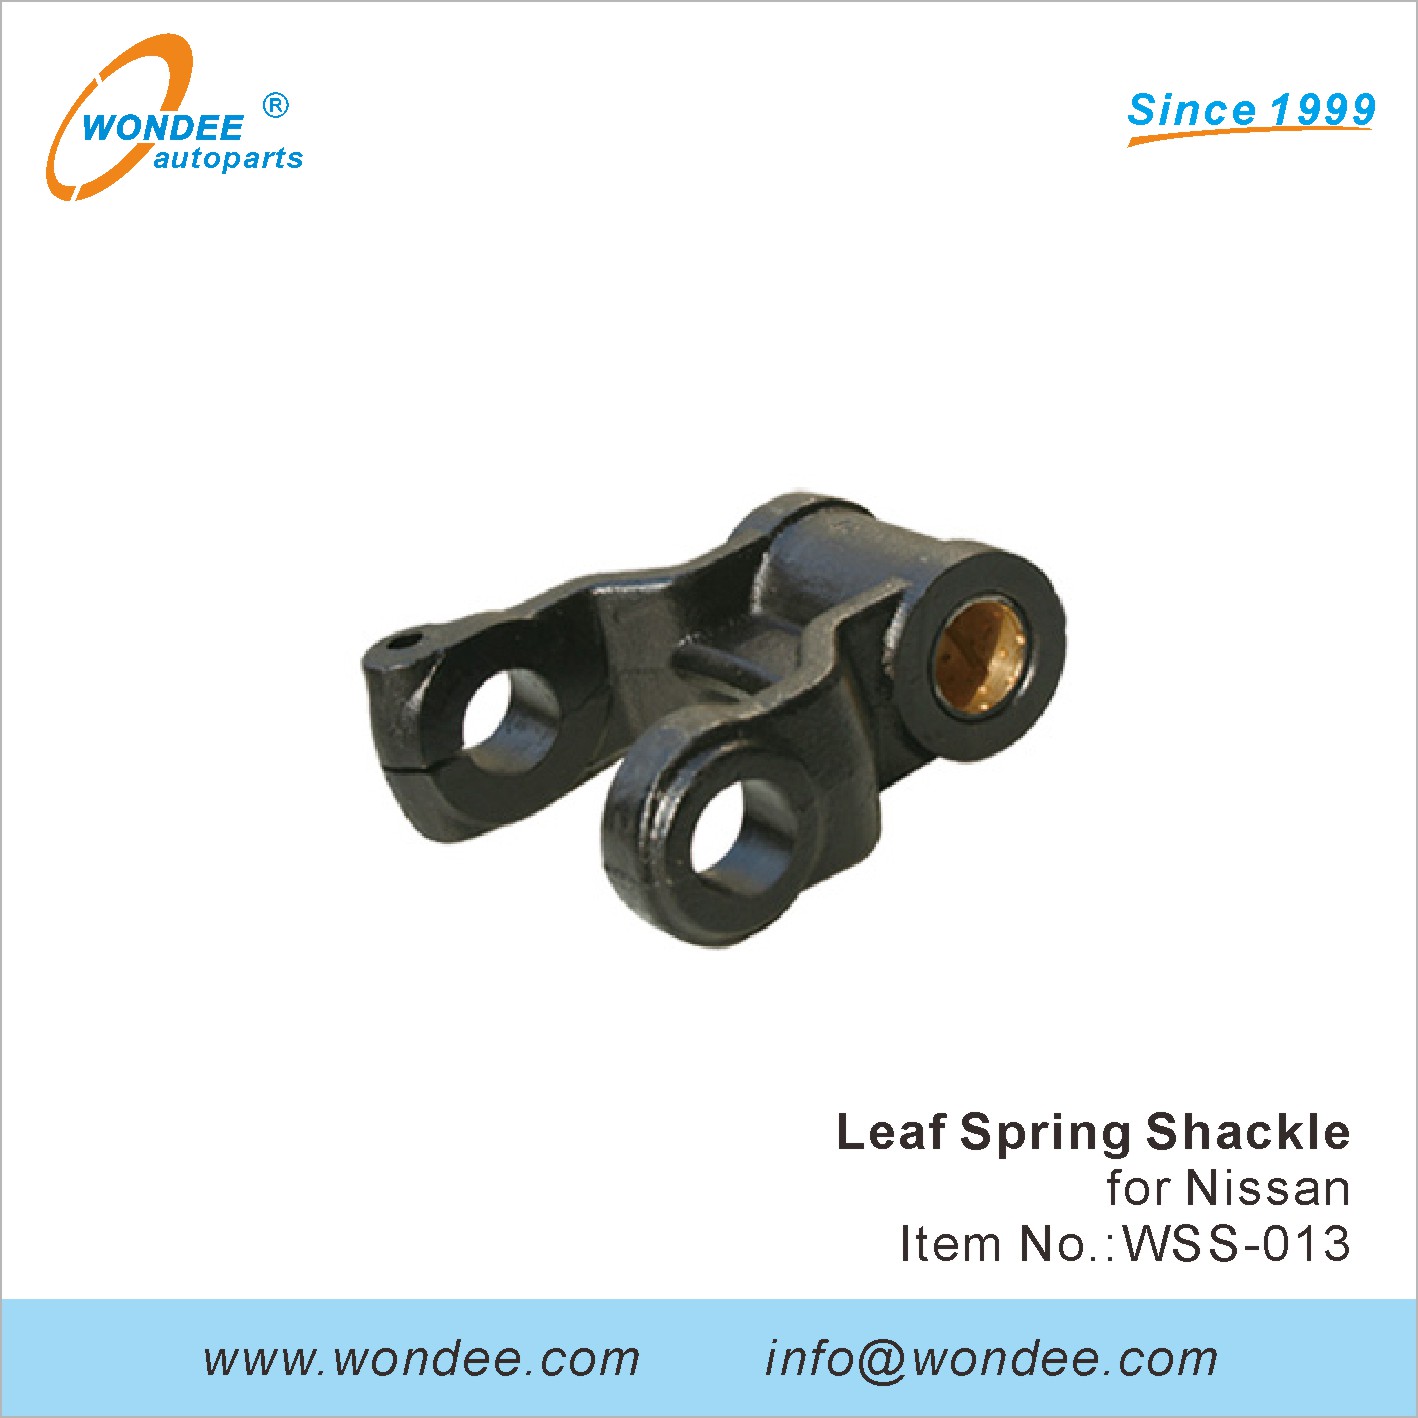 WONDEE leaf spring shackle (13)